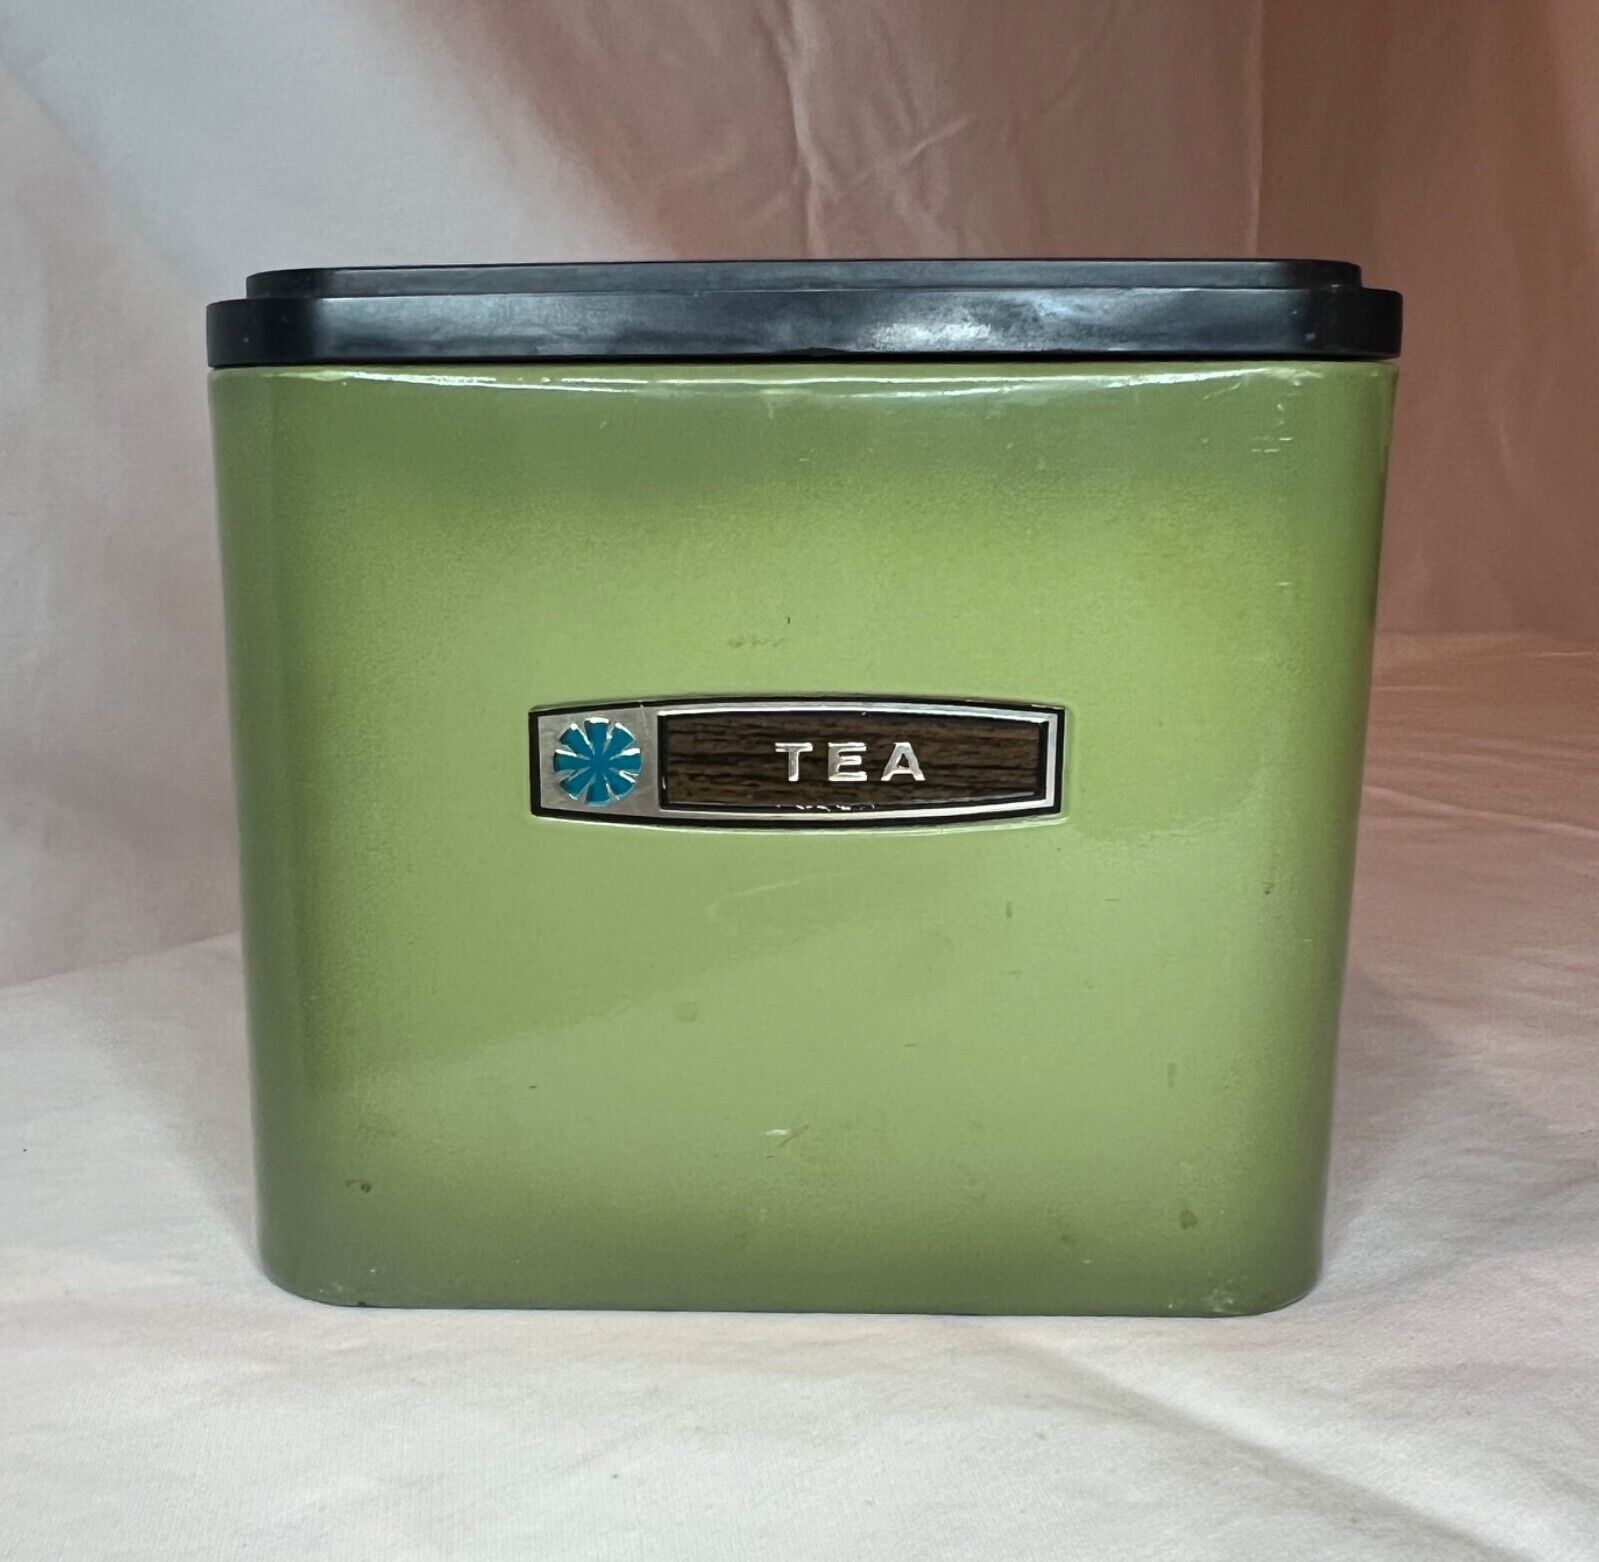 Masterware Avocado Green “Tea” Metal Canister